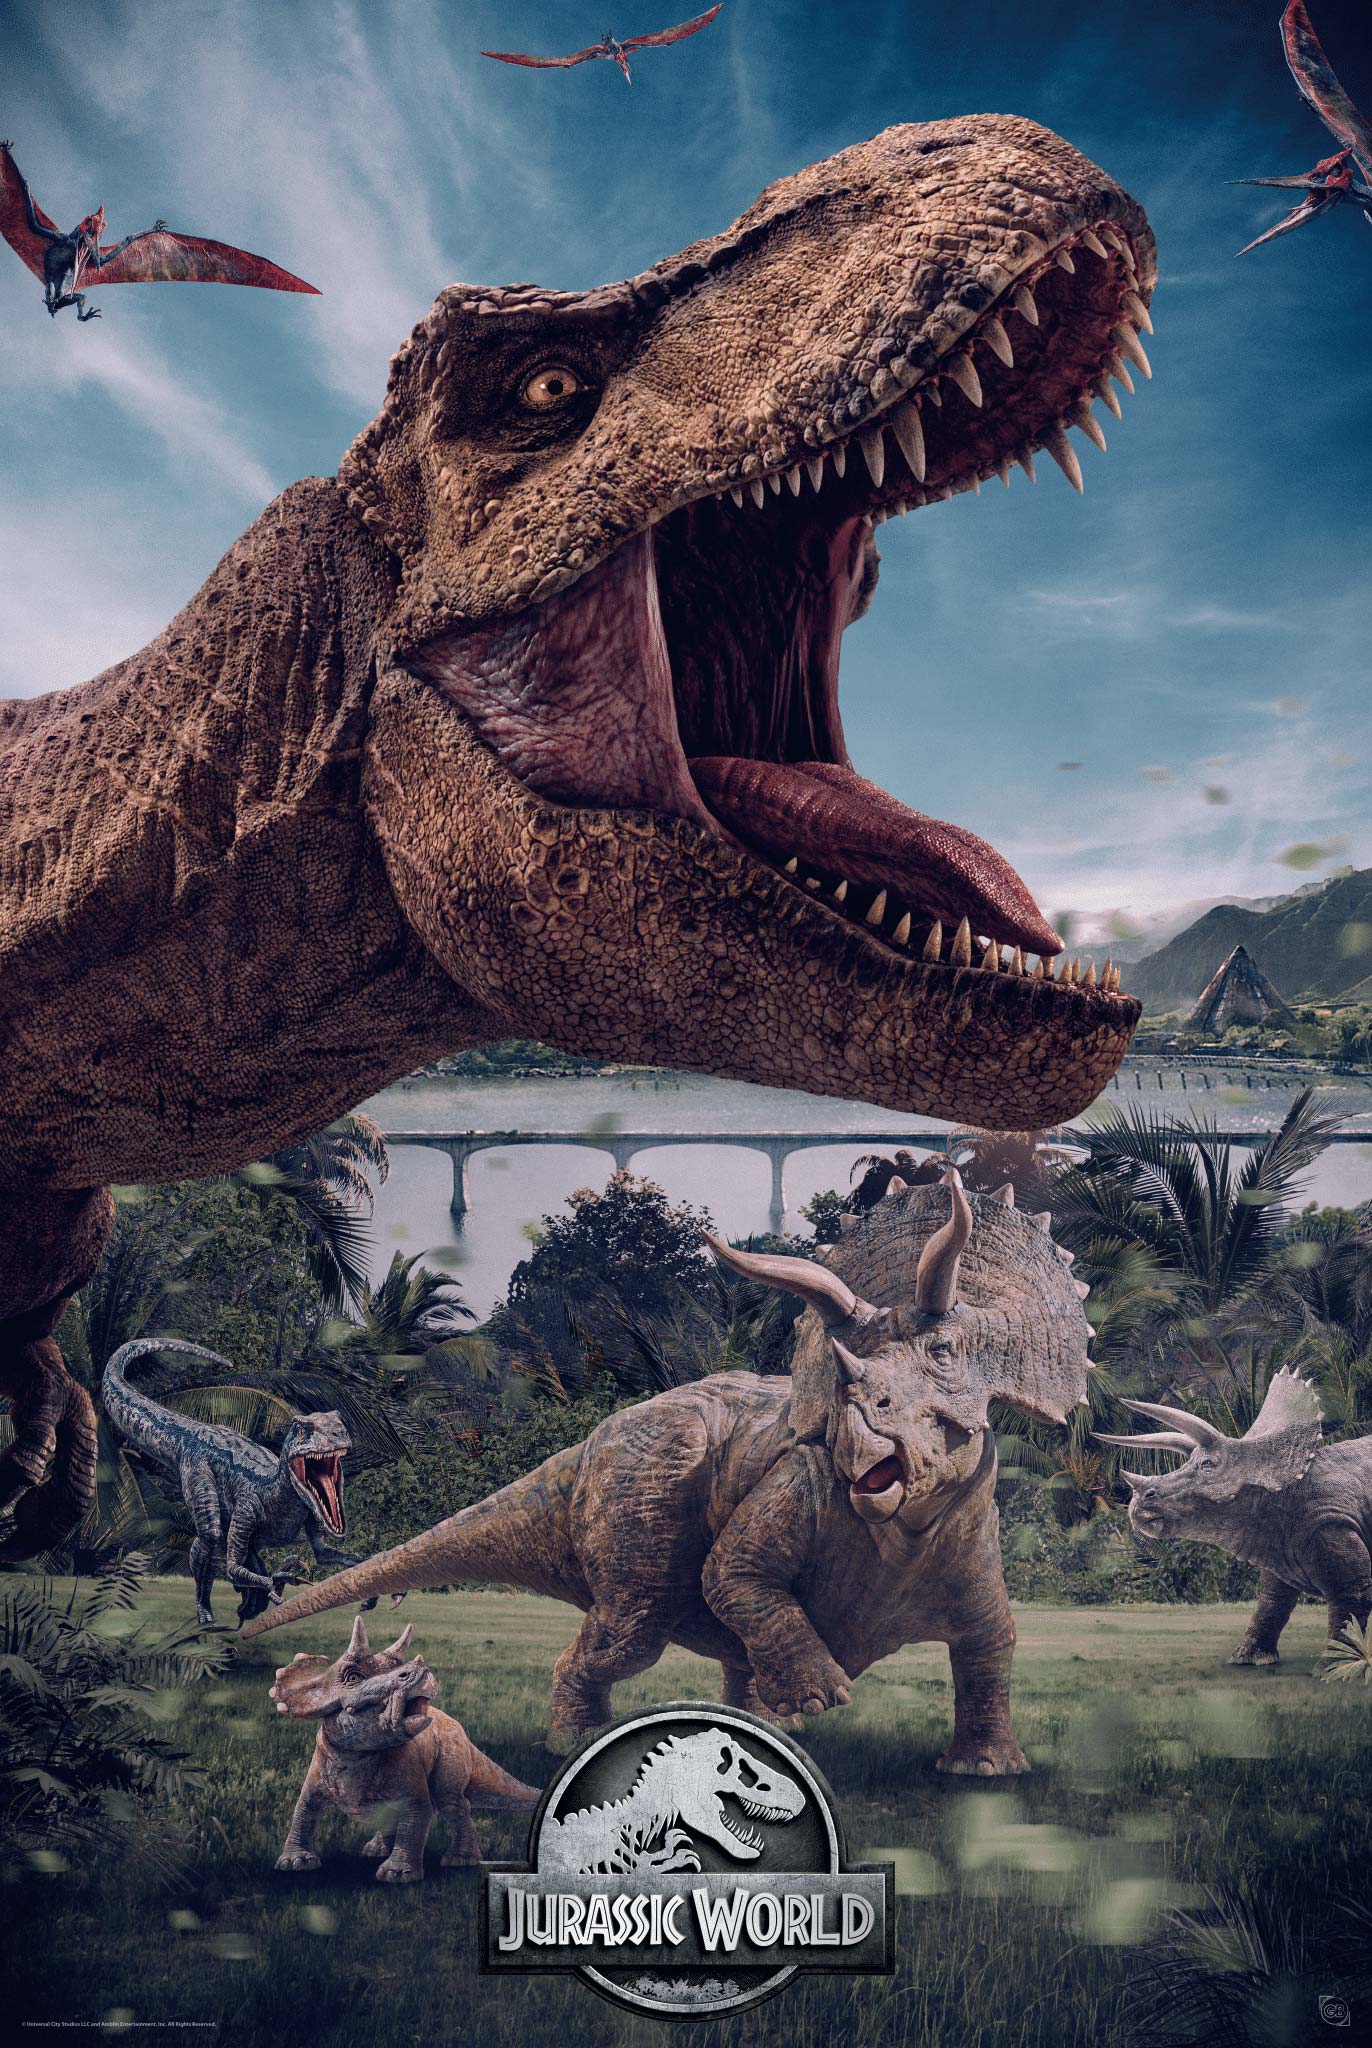 World, Jurassic World Poster